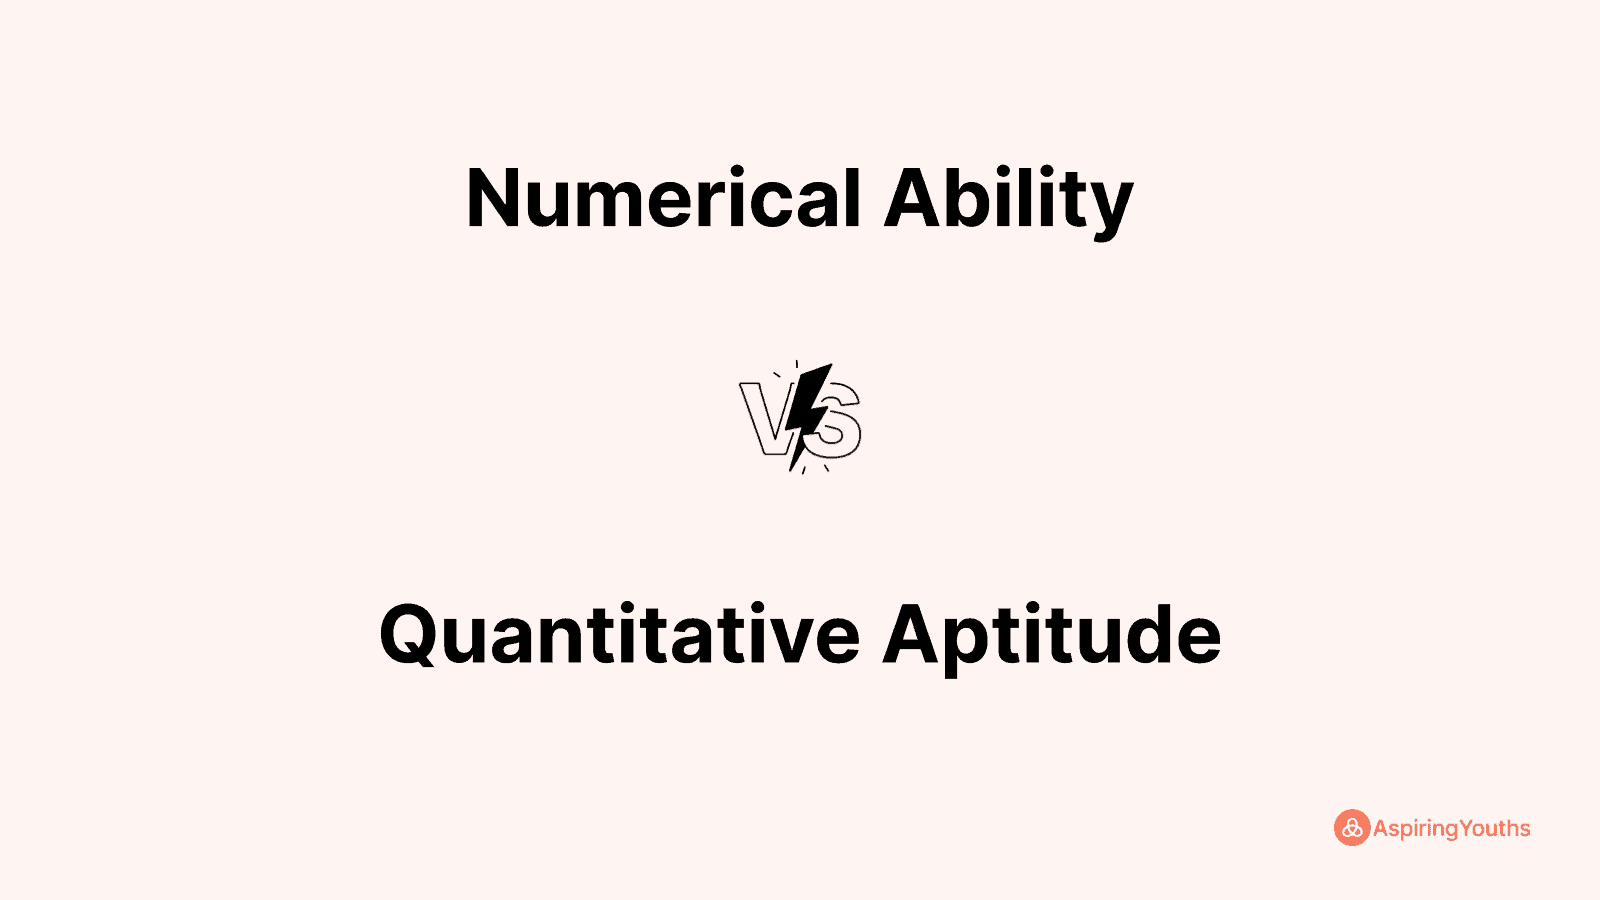 Numerical Ability vs Quantitative Aptitude